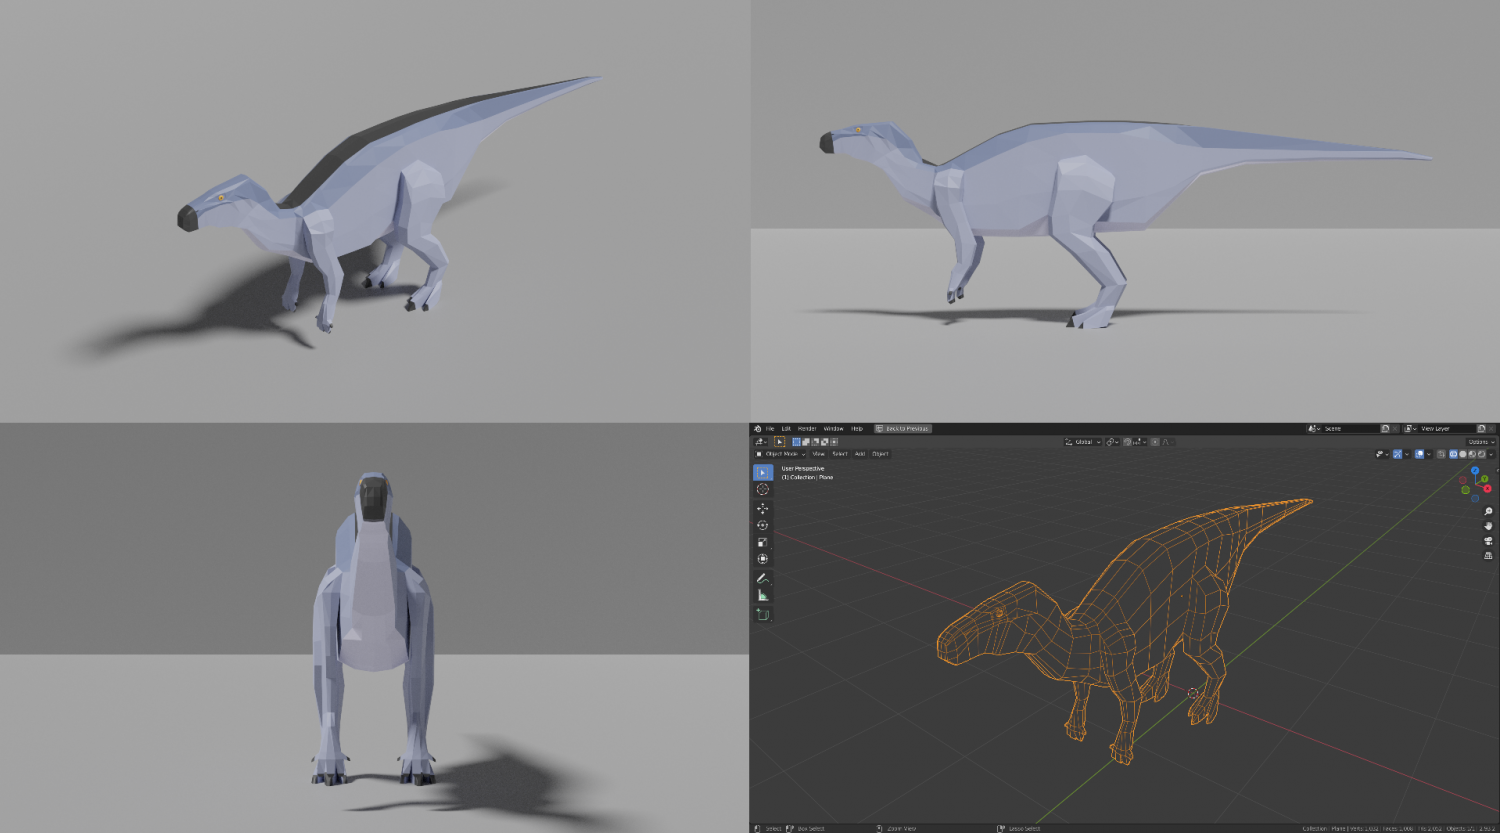 Adocus 3D computer graphics, Dinosaur, gray tyrannosaurus rex dinosaur, 3D  Computer Graphics, animals, tyrannosaurus png